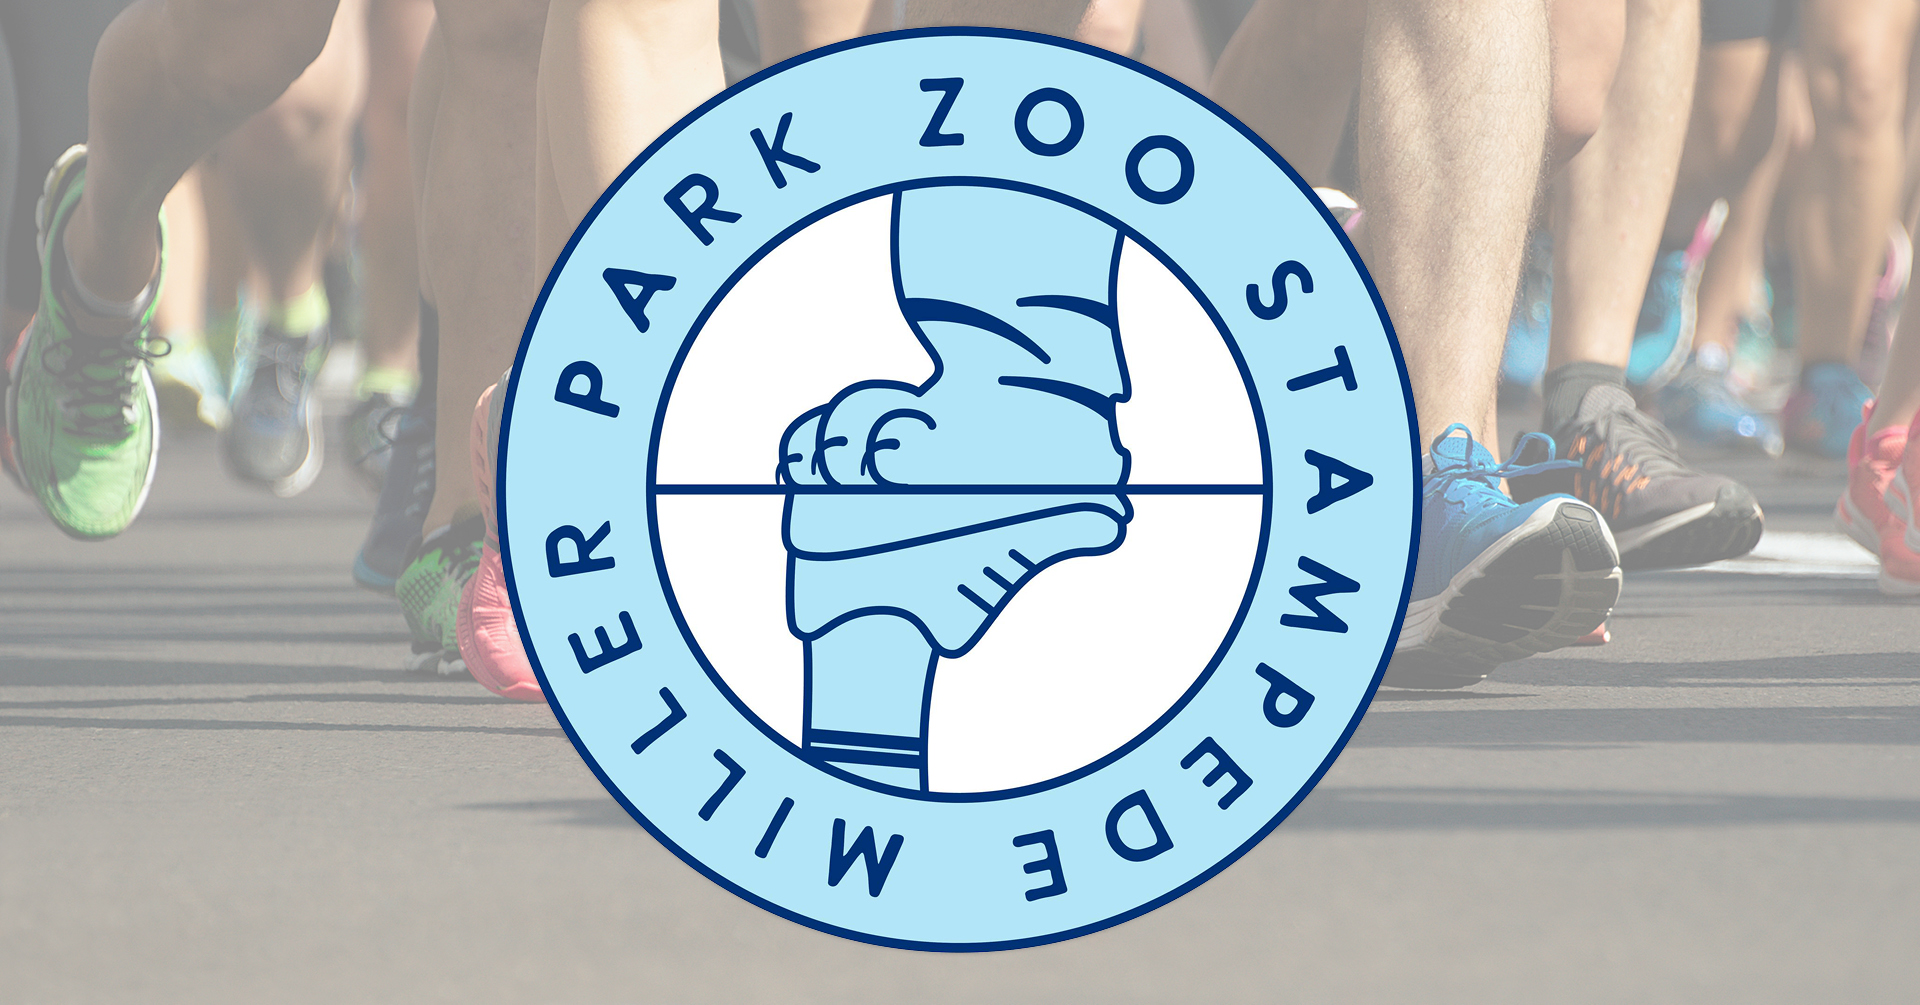 MILLER PARK ZOO STAMPEDE – 5K, 3K AND KIDS FUN RUN